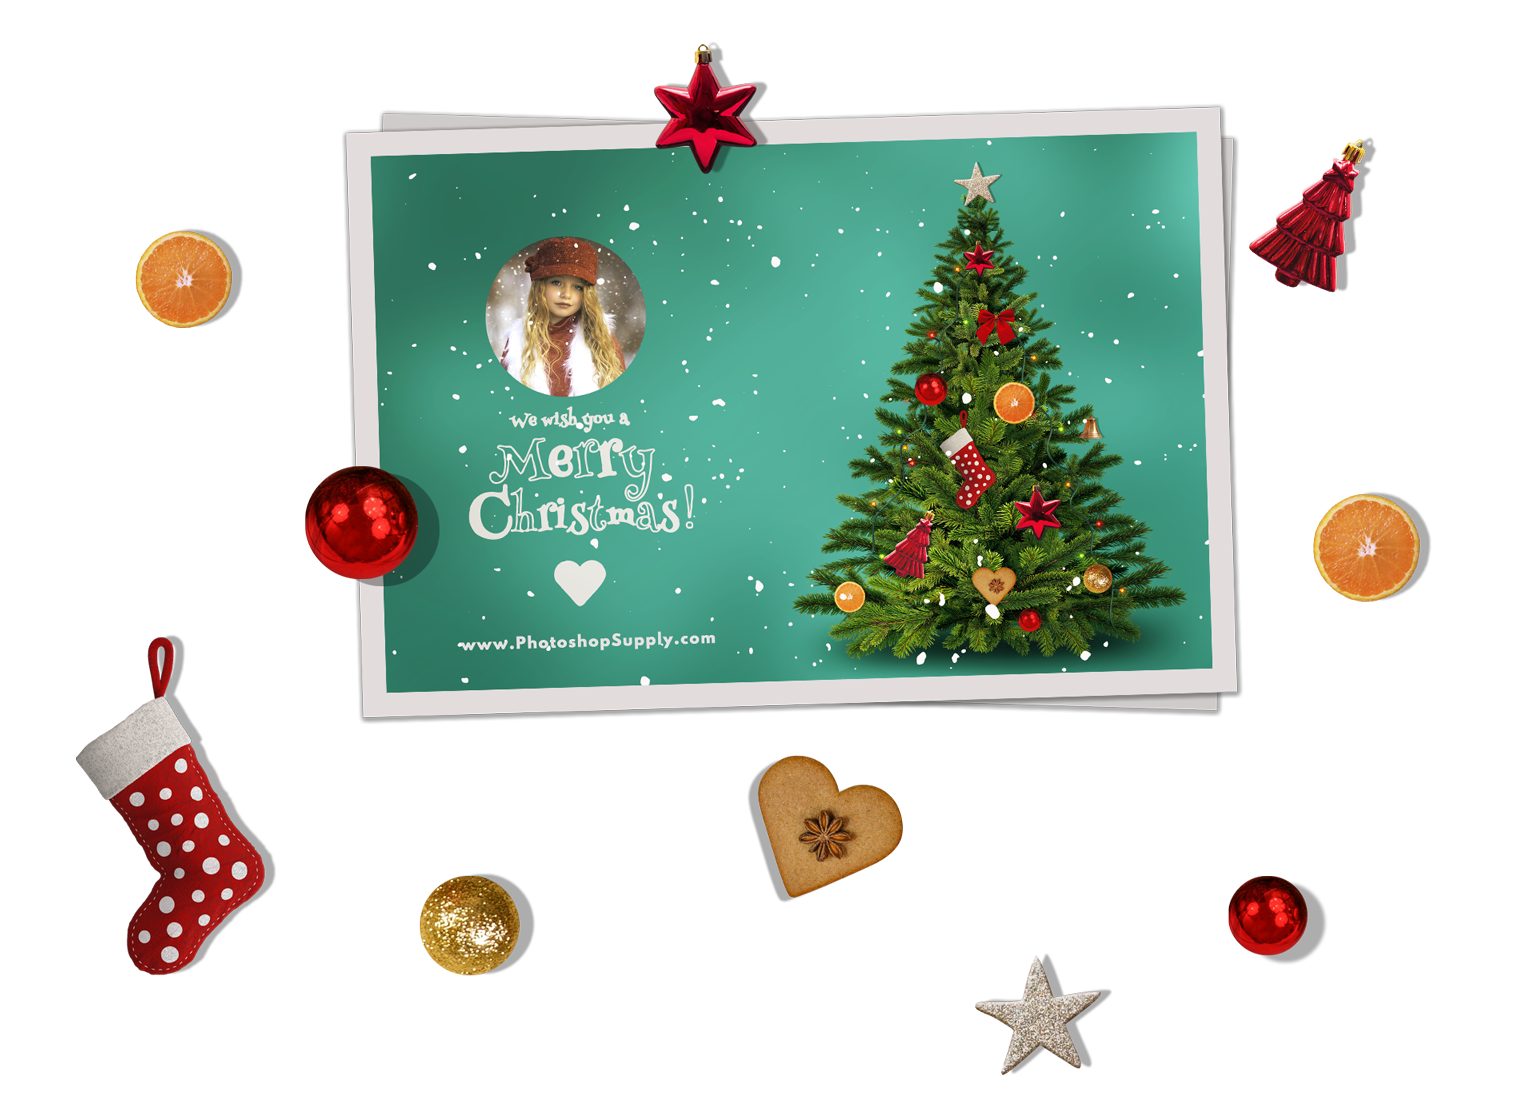 Christmas Card Templates For Photoshop - Photoshop Supply For Free Christmas Card Templates For Photoshop